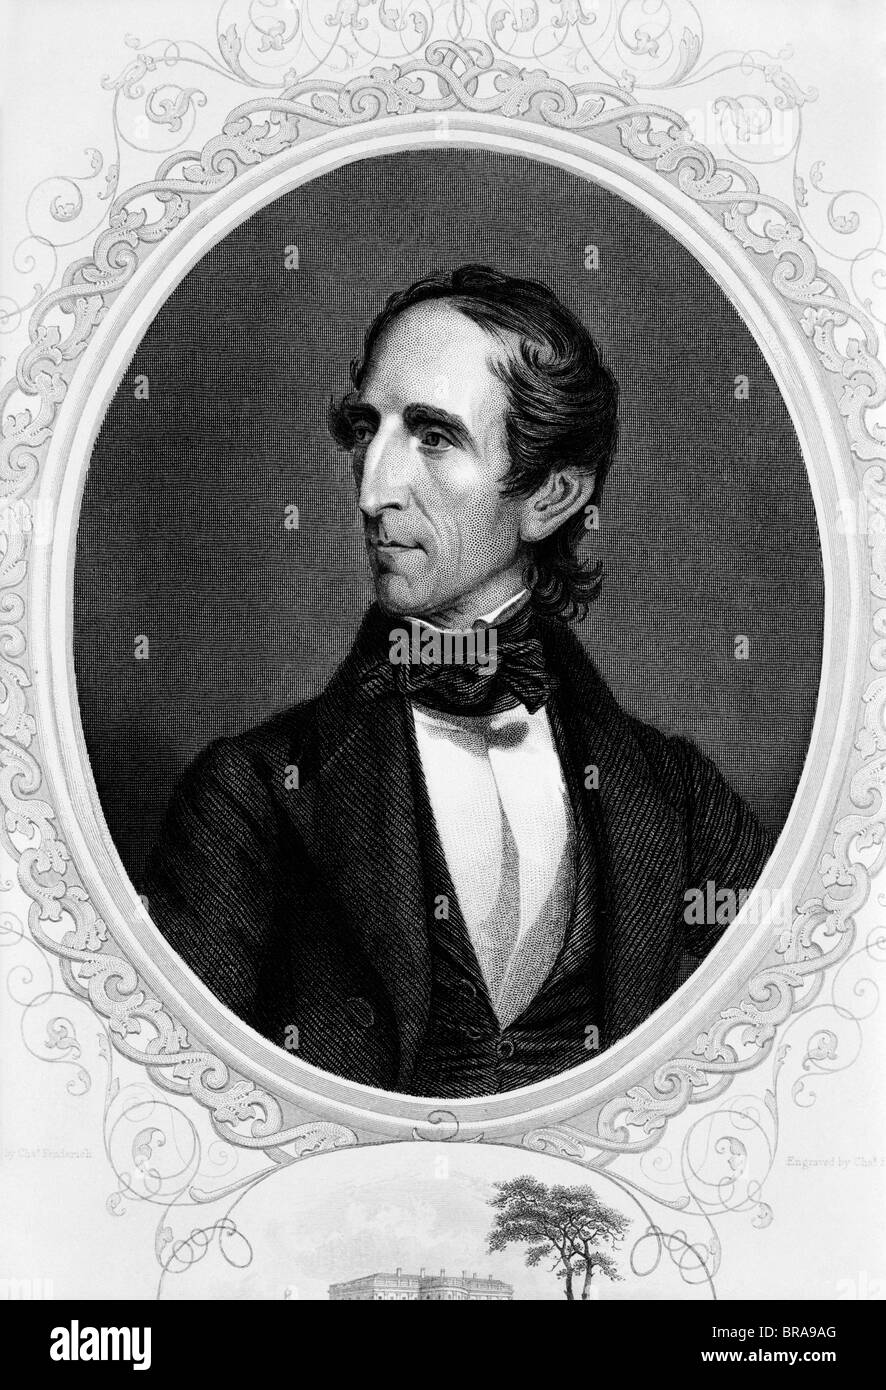 1800s PORTRAIT ILLUSTRATION OF JOHN TYLER 10th PRESIDENT OF UNITED STATES CIRCA 1840 Stock Photo